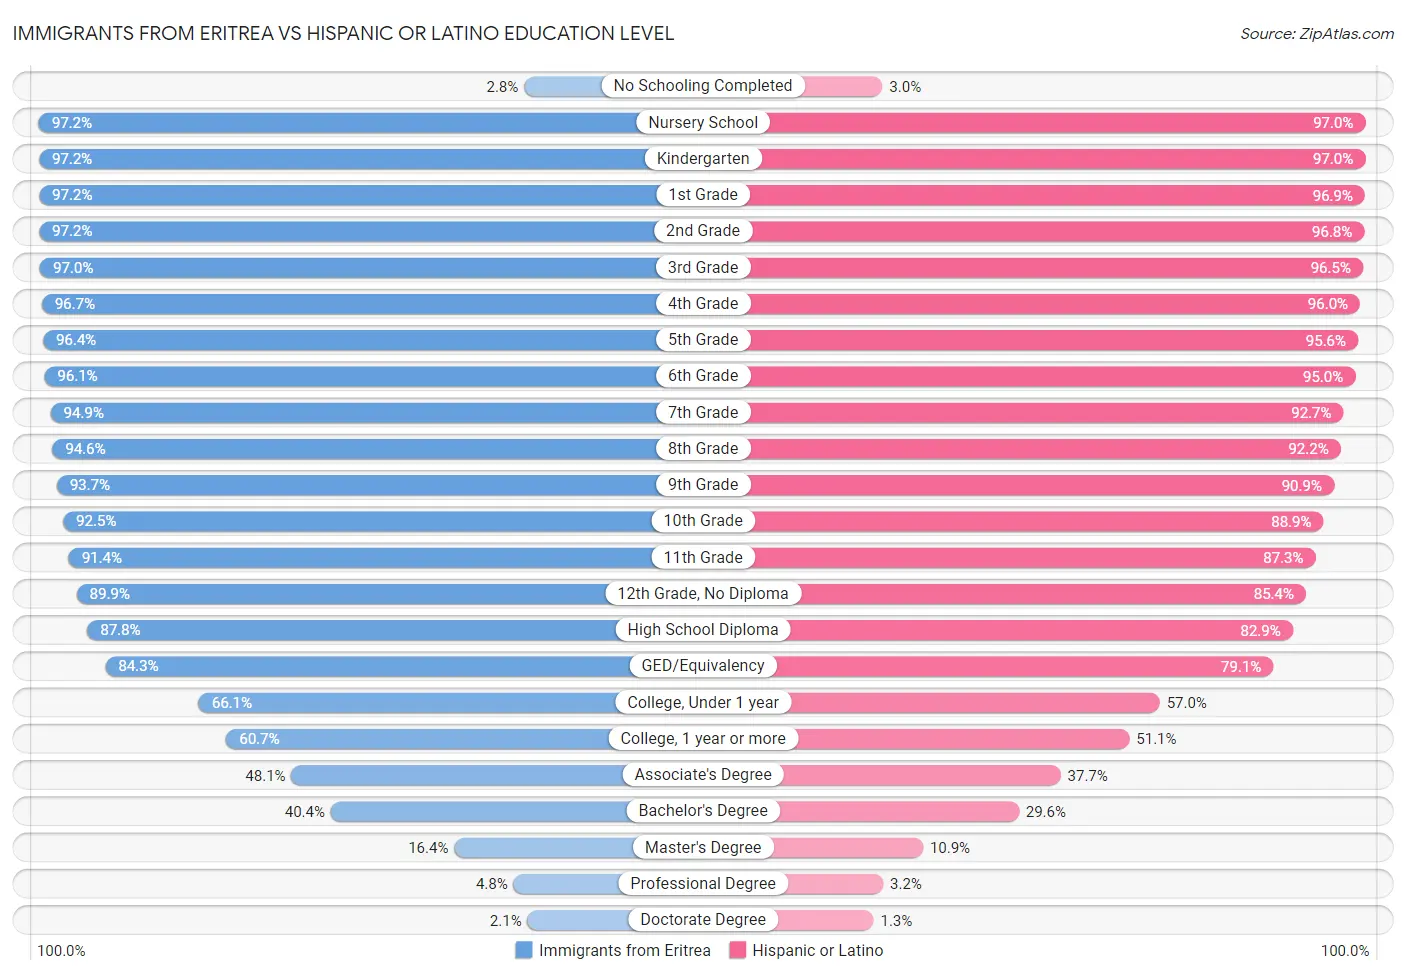 Immigrants from Eritrea vs Hispanic or Latino Education Level